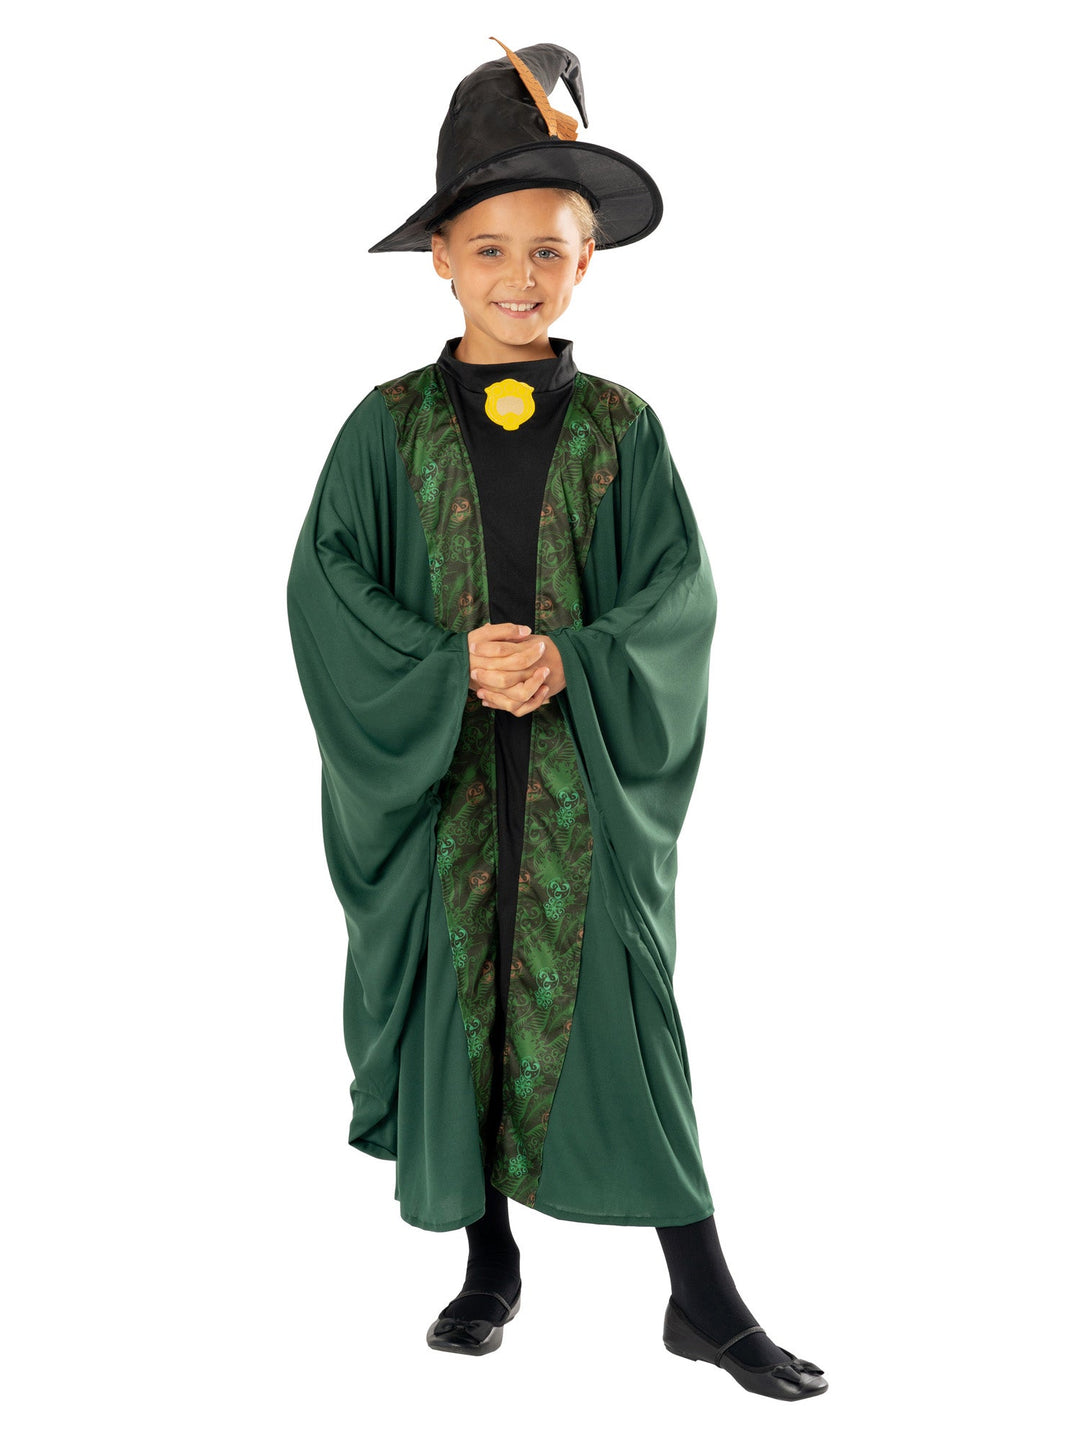 Professor Mcgonagall Robe Kids Harry Potter Costume_3 rub-3009139-10